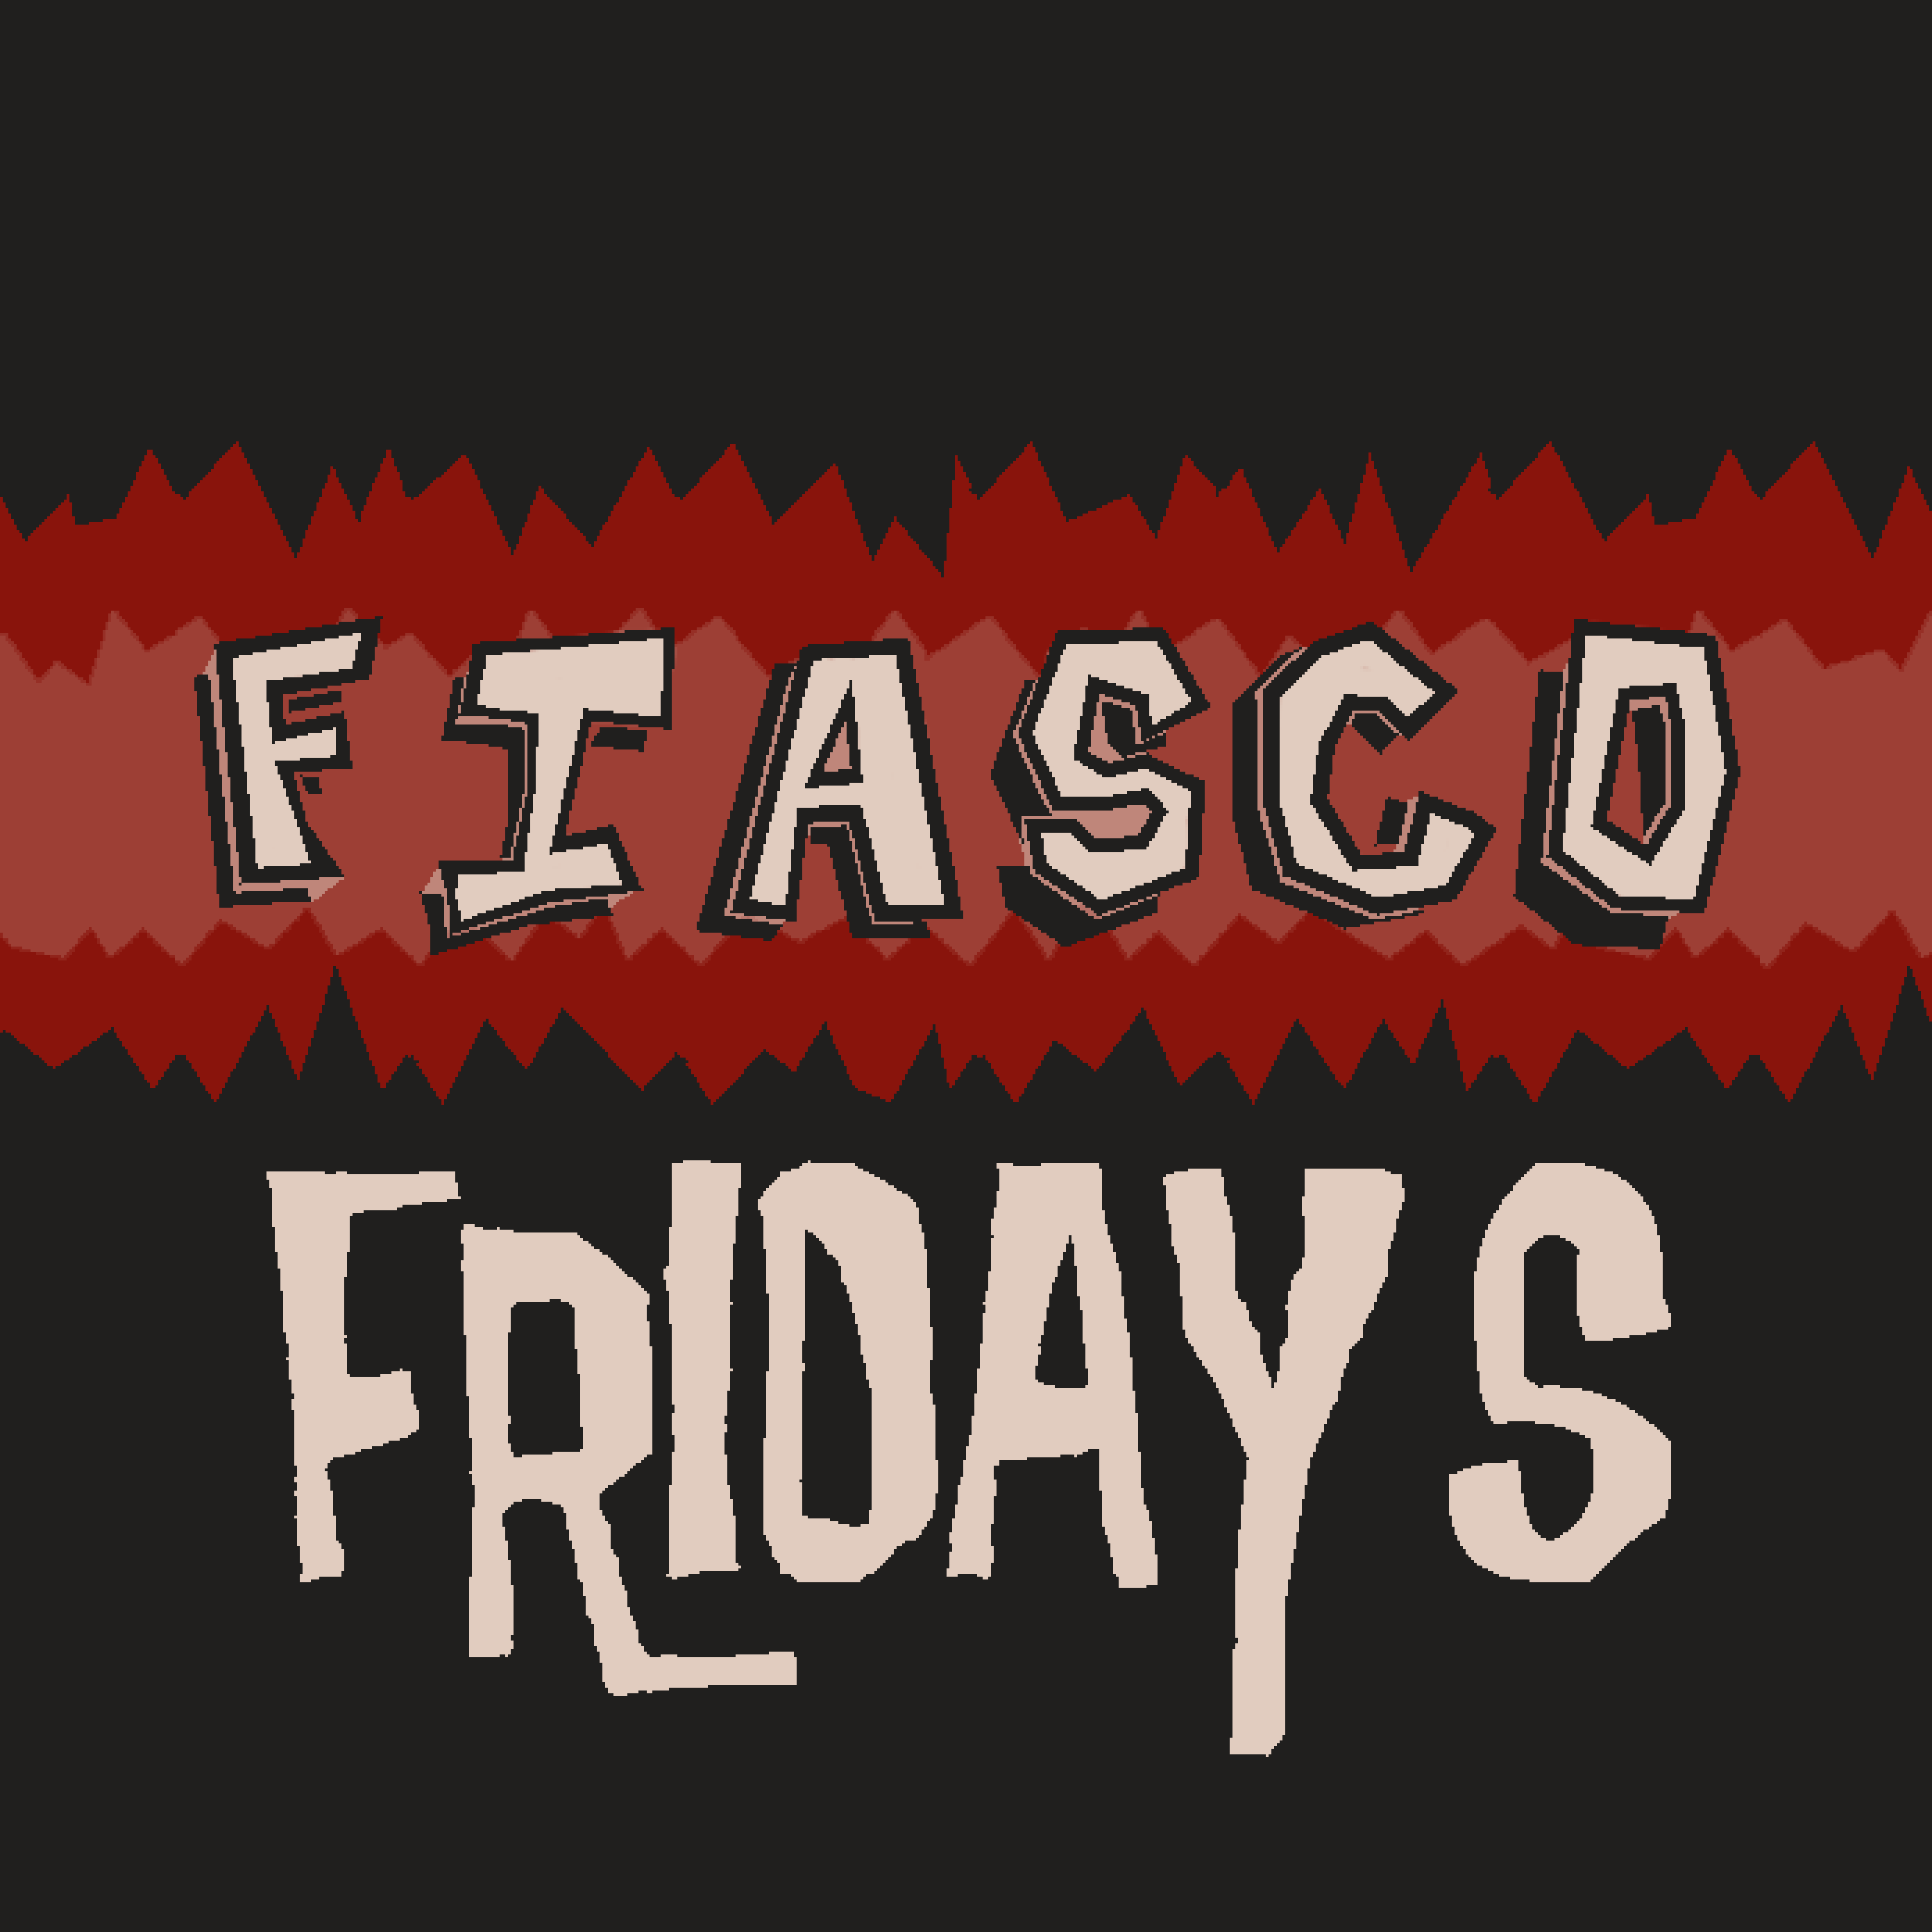 Fiasco Fridays